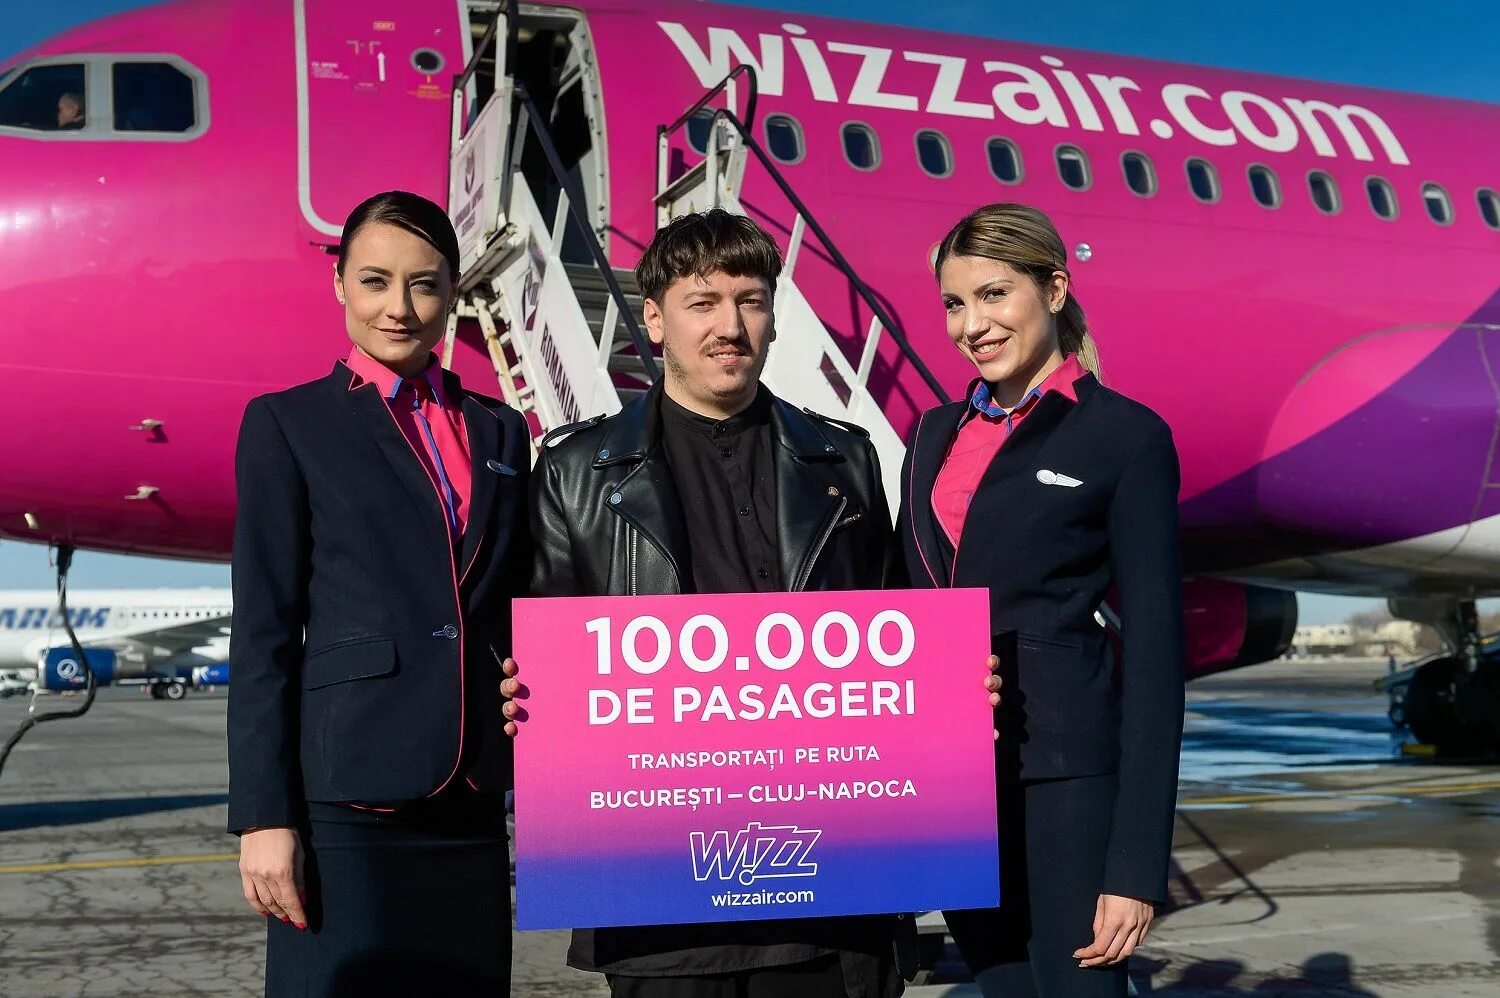 Wizzair москва. Wizz Air стюардессы. Самолеты авиакомпании. Wizz Air stjuardes. Wizz Air бортпроводники.